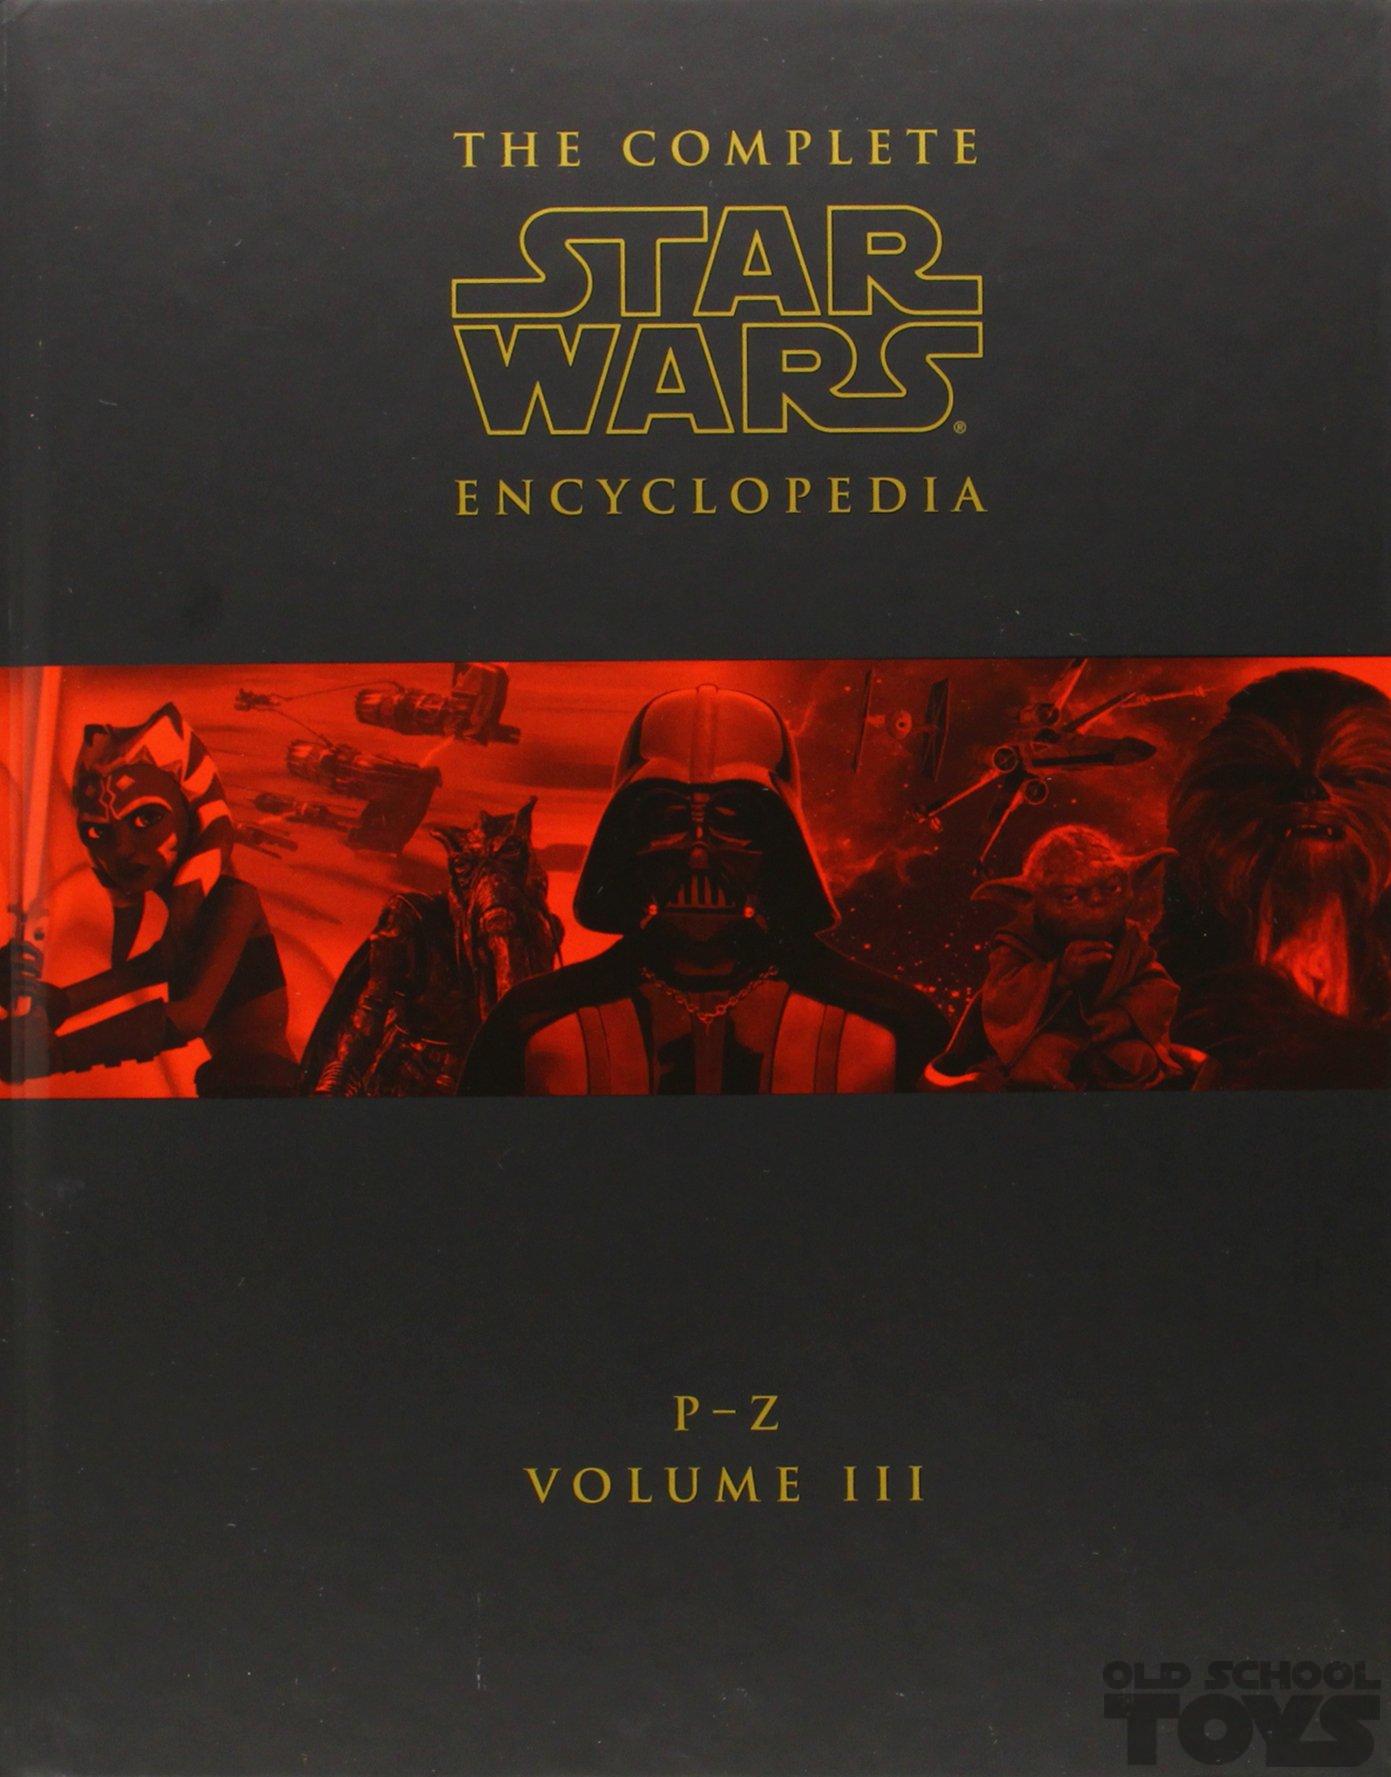 The complete star wars encyclop stephen j sansweet (3) by Legion Perú -  Issuu